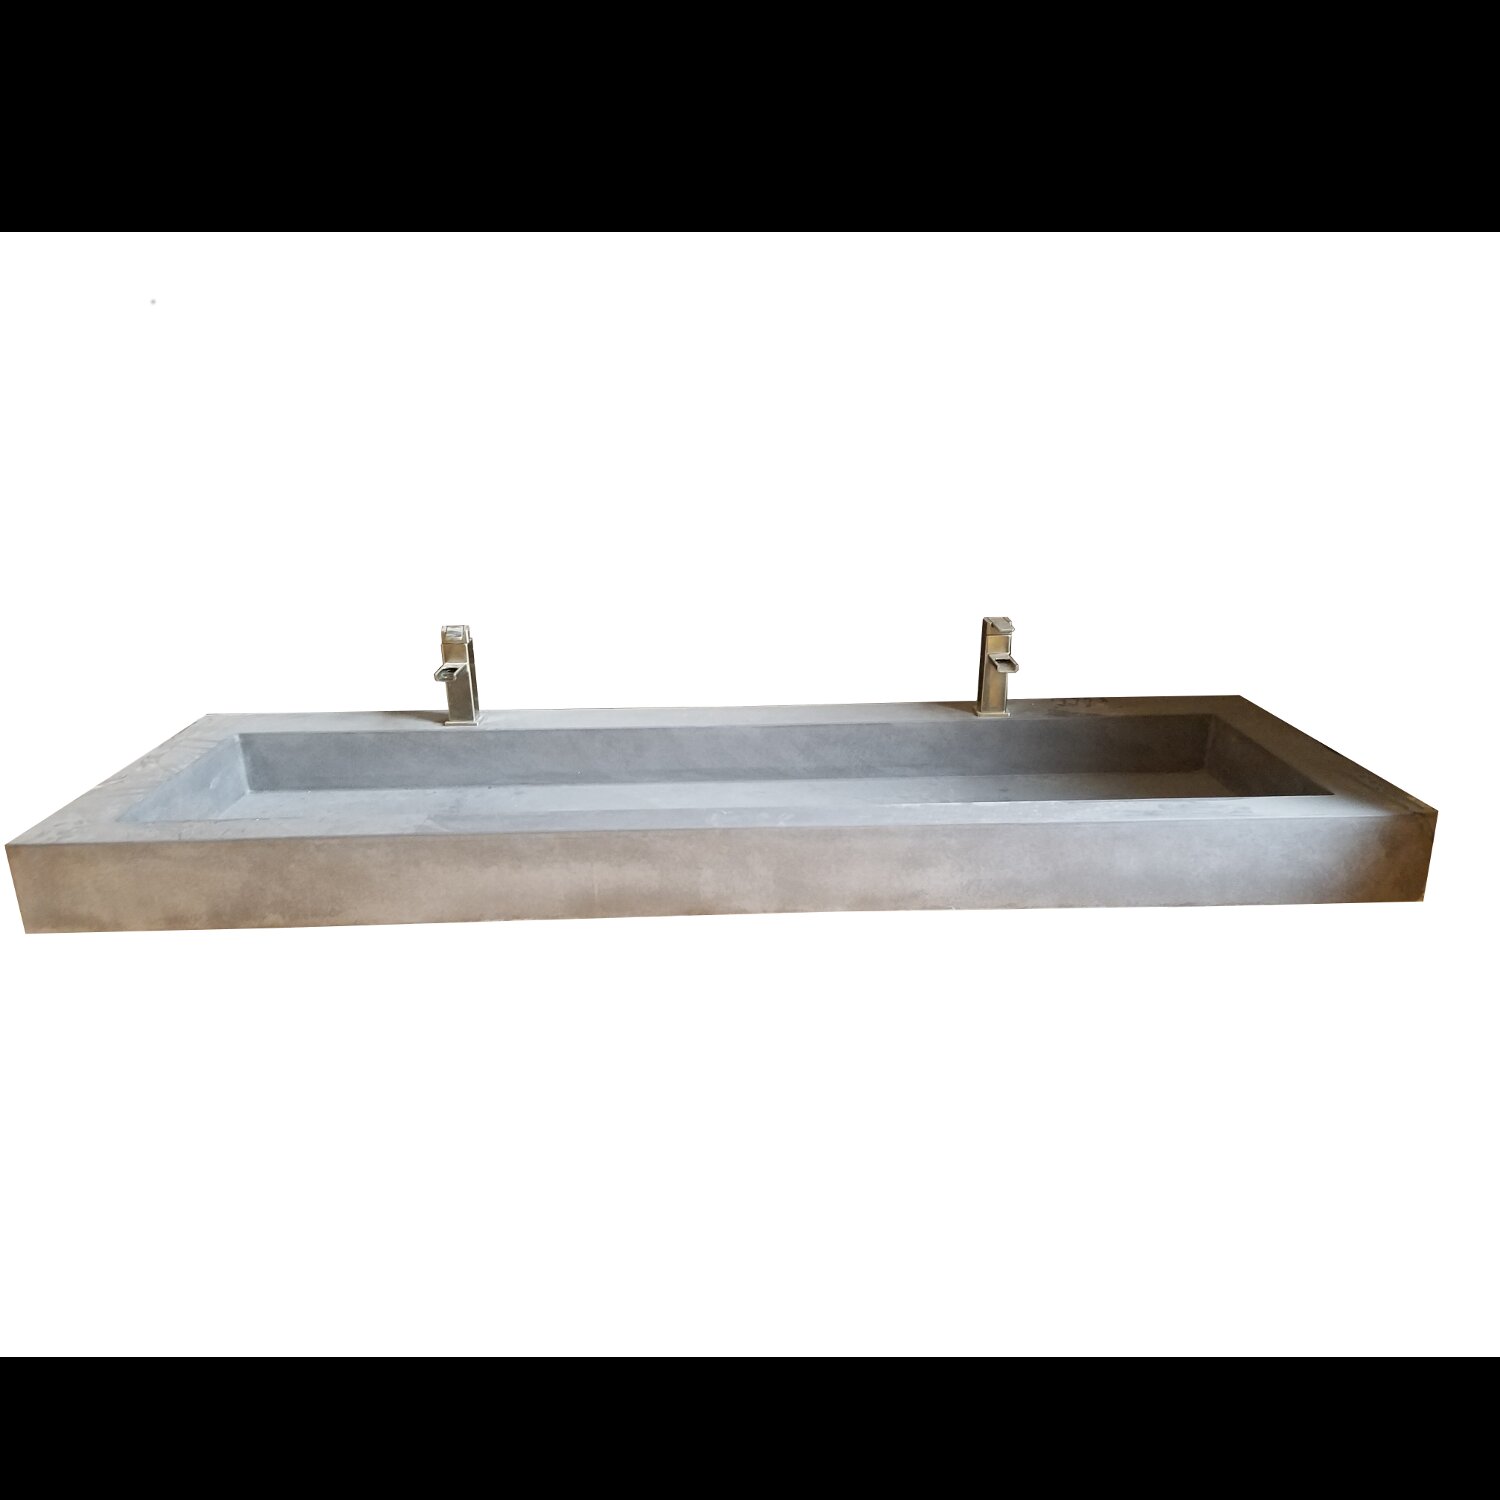 Details About Hyde Products Farmhouse Rectangular Trough Bathroom Sink Hyps1043